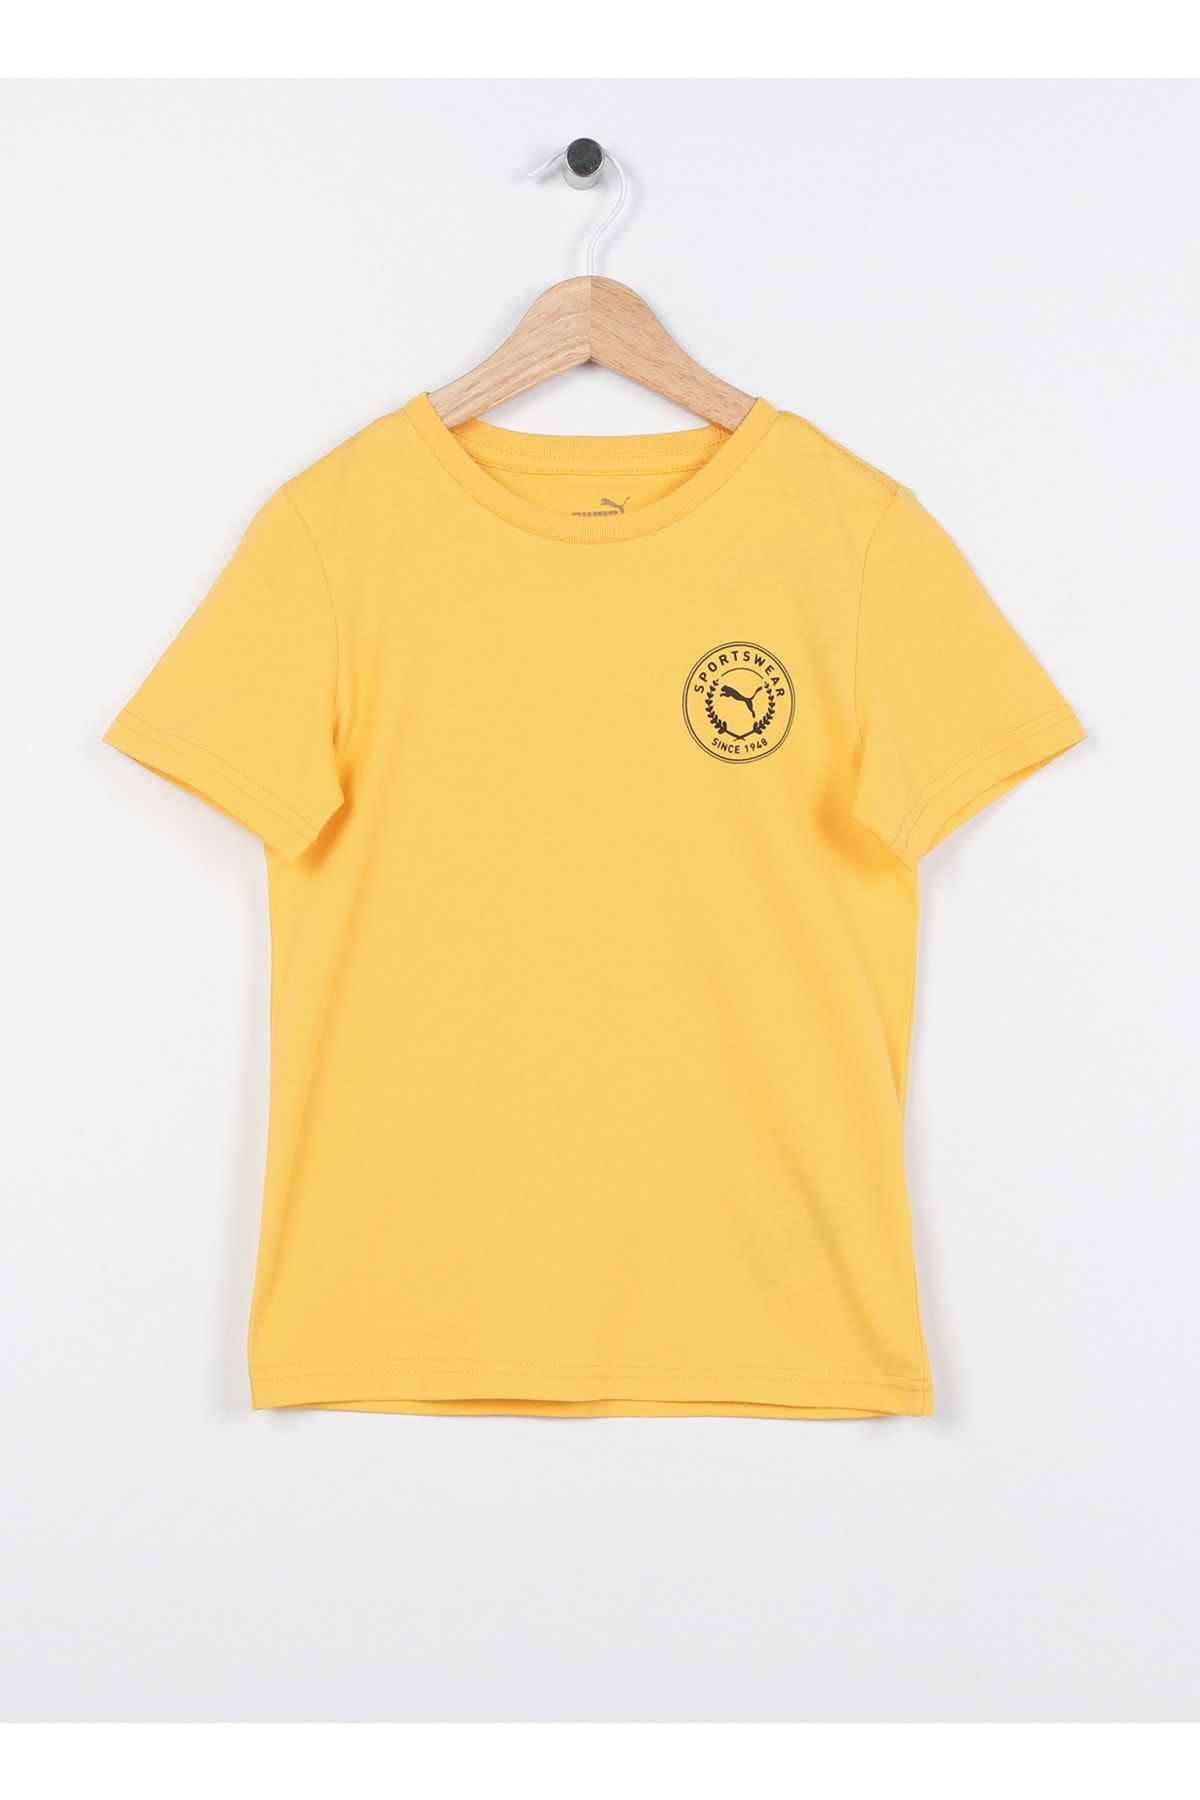 Puma Düz Sarı Erkek Çocuk T-Shirt 67996803 Boy s TEE